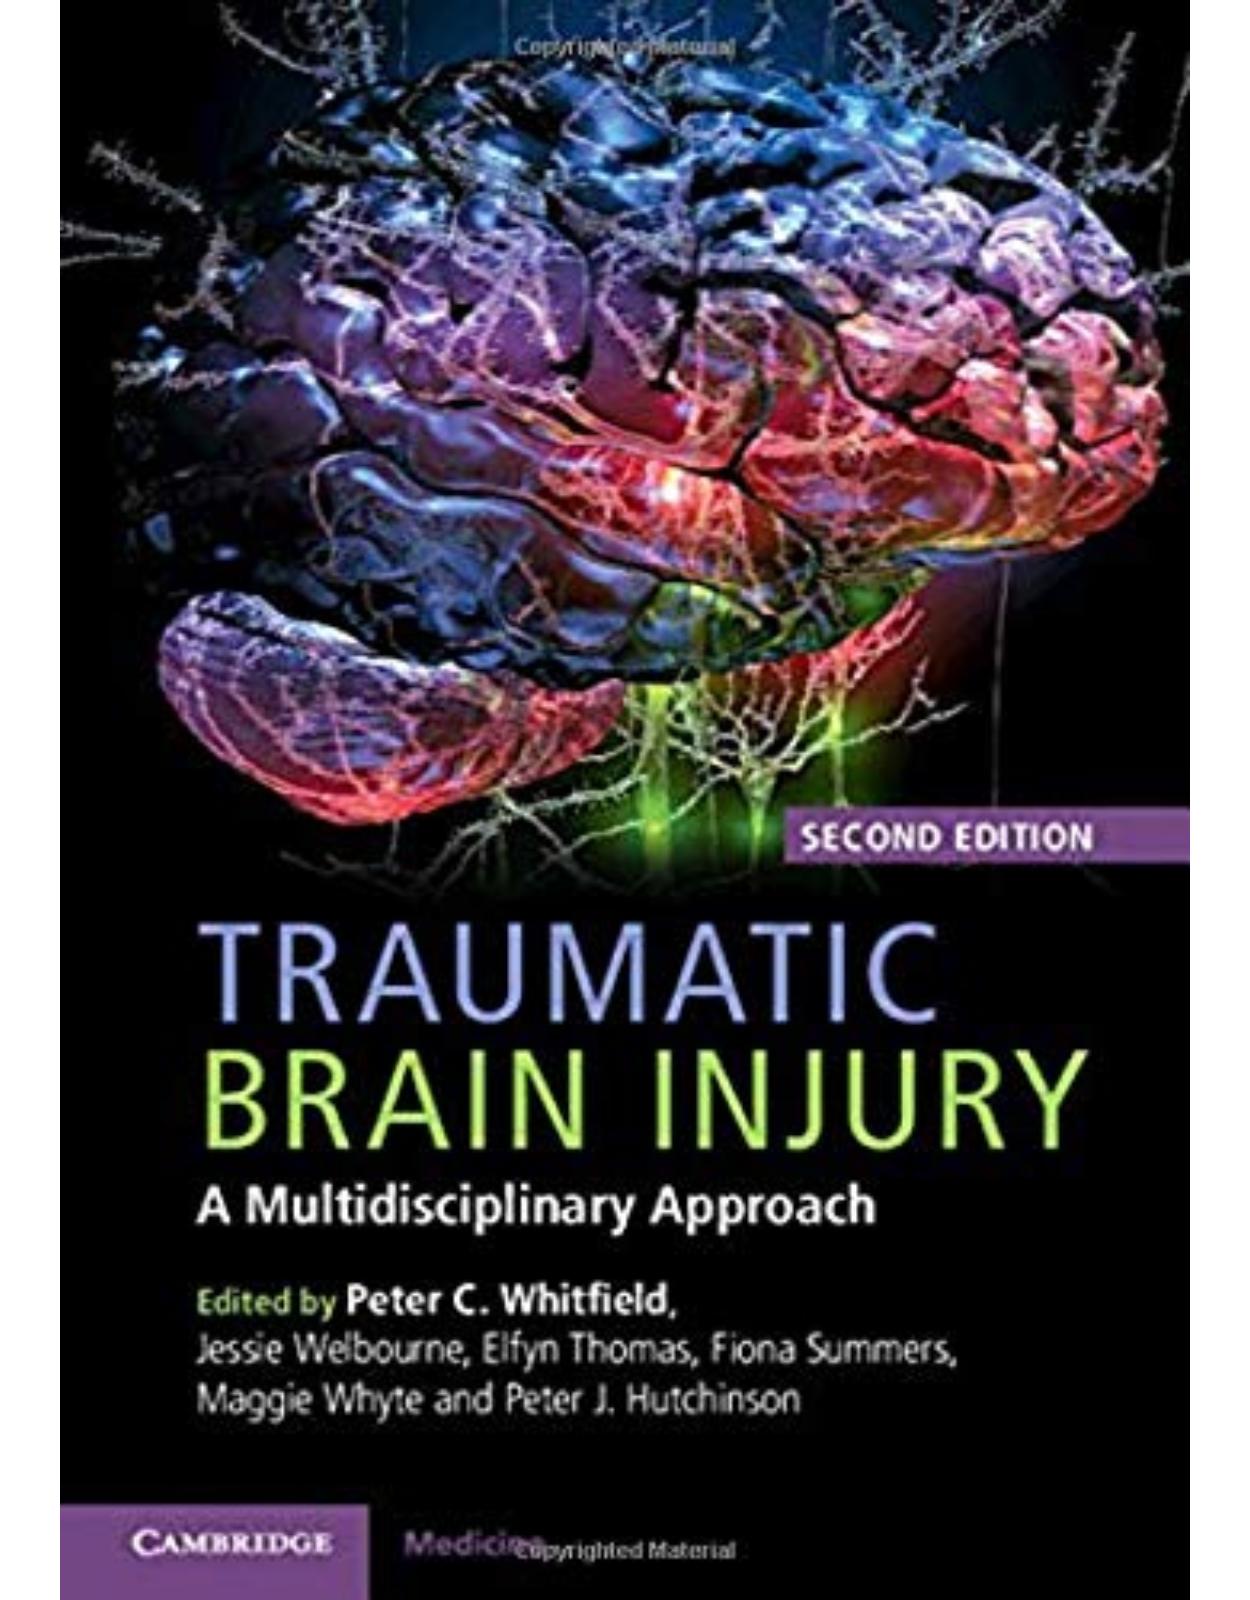 Traumatic Brain Injury: A Multidisciplinary Approach